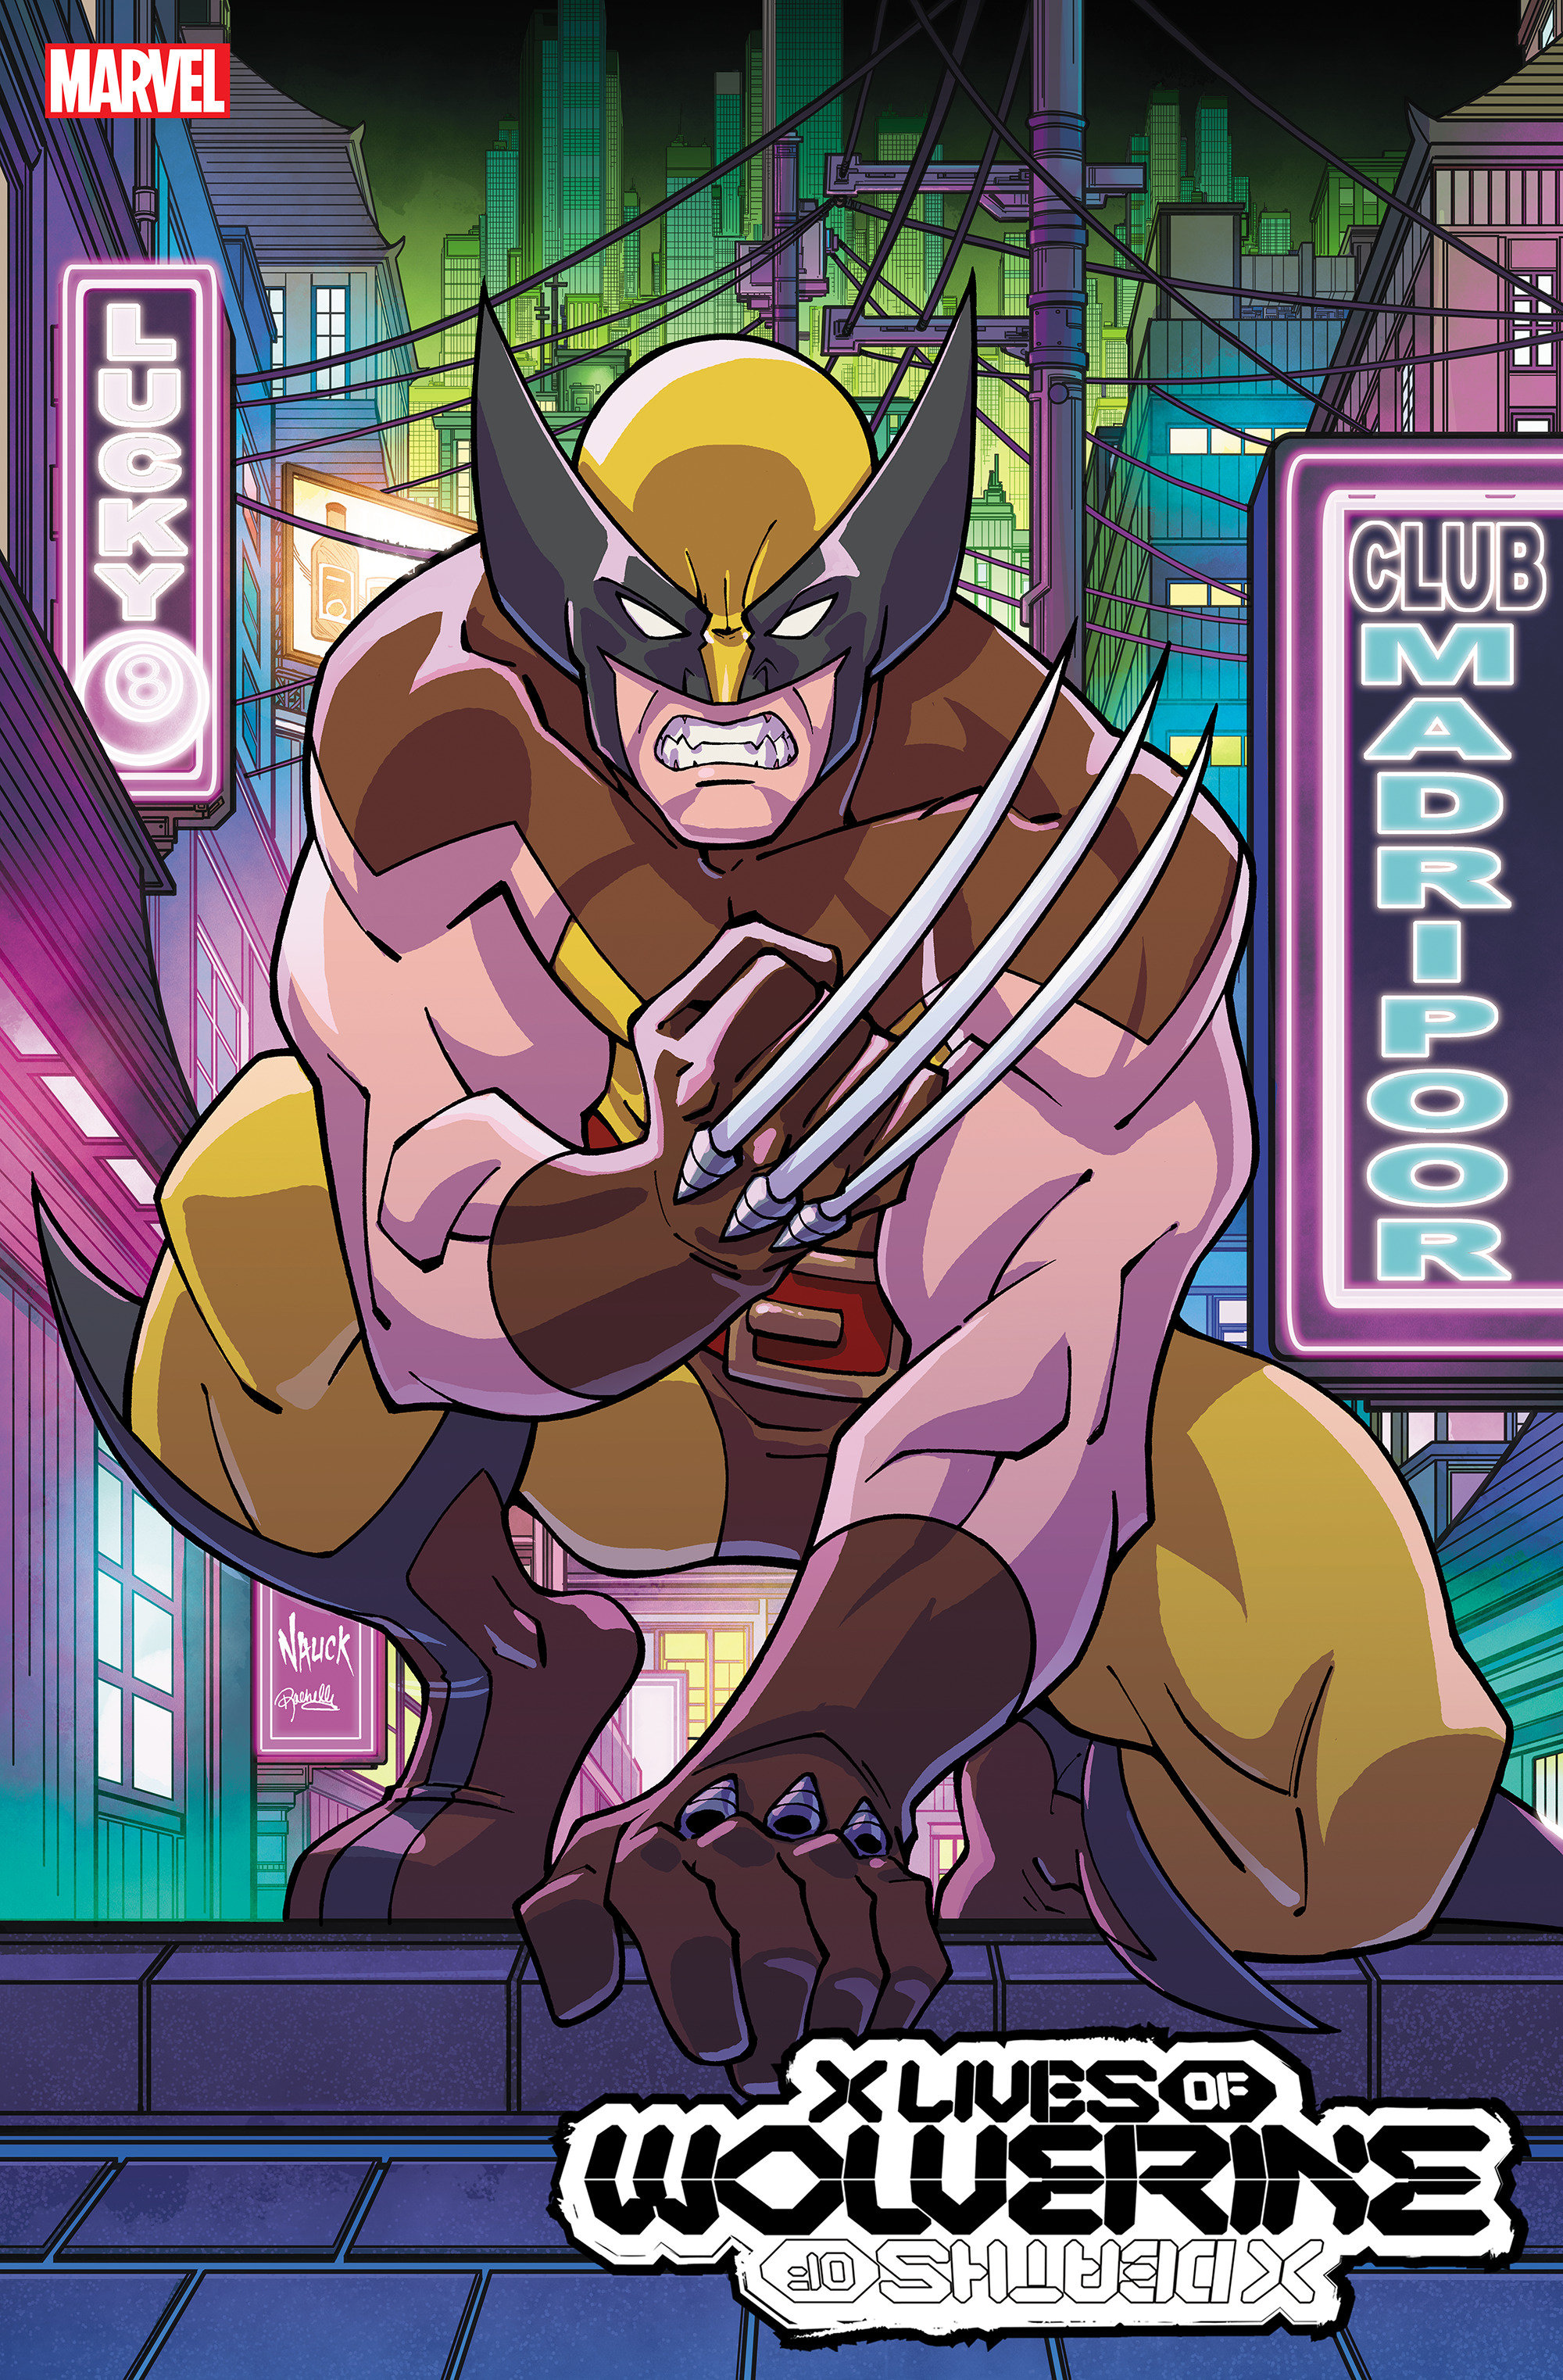 X Lives of Wolverine #1 1 for 25 Incentive Marco Checchetto